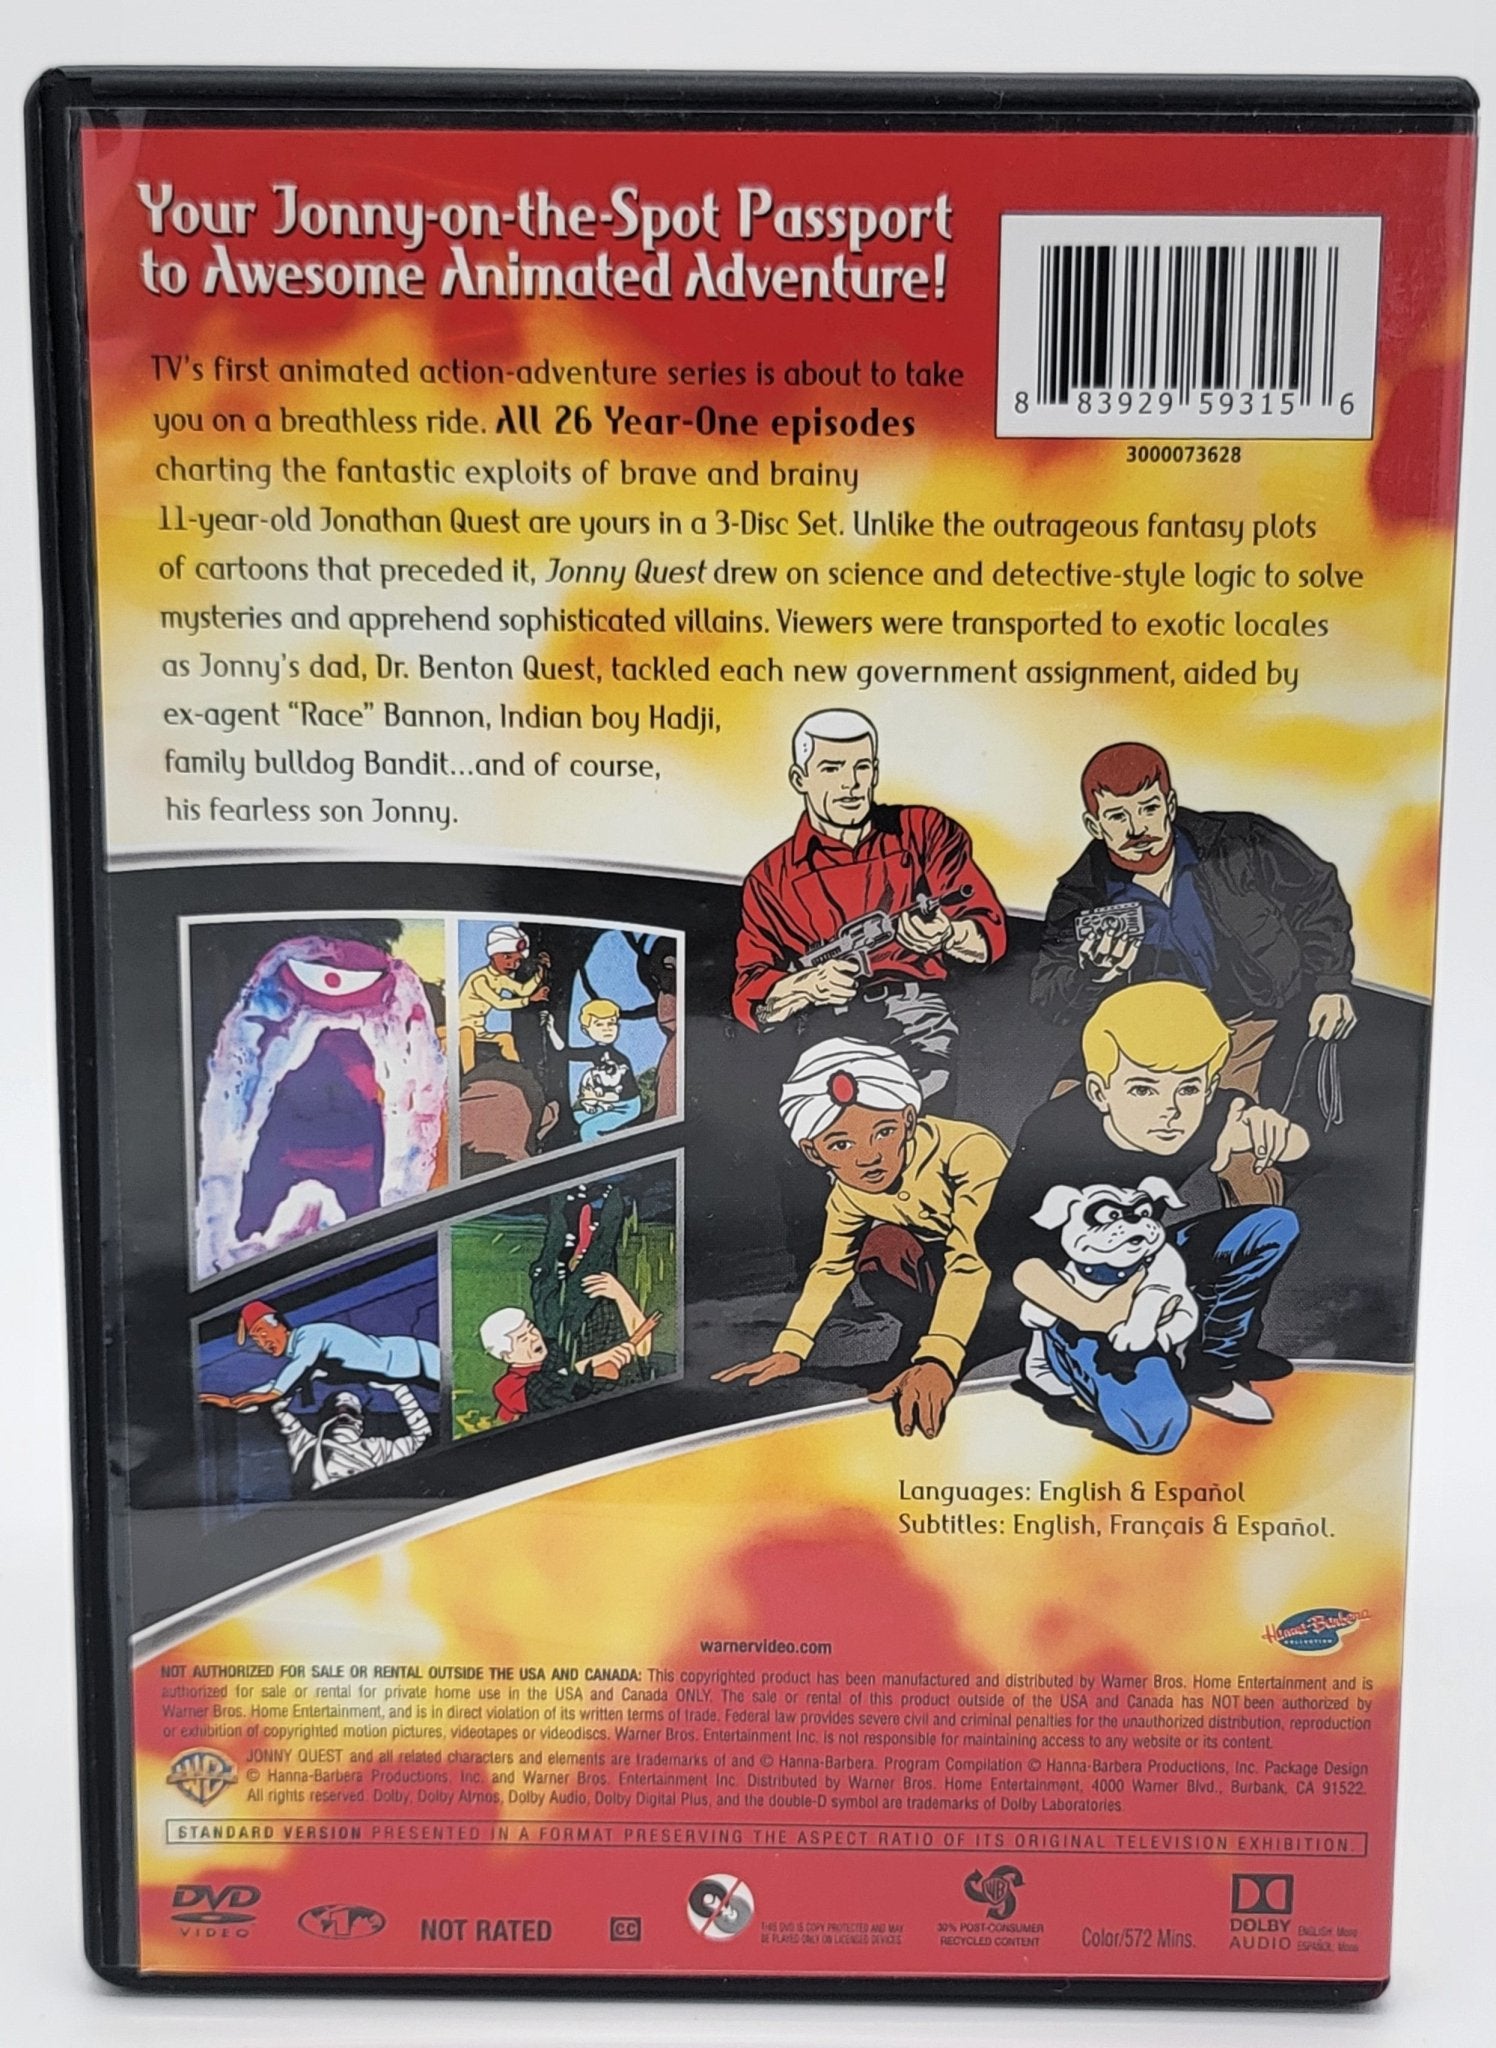 Warner Brothers - Jonny Quest | DVD | Complete First Season | Hanna-Barbera Diamond Collection - DVD - Steady Bunny Shop